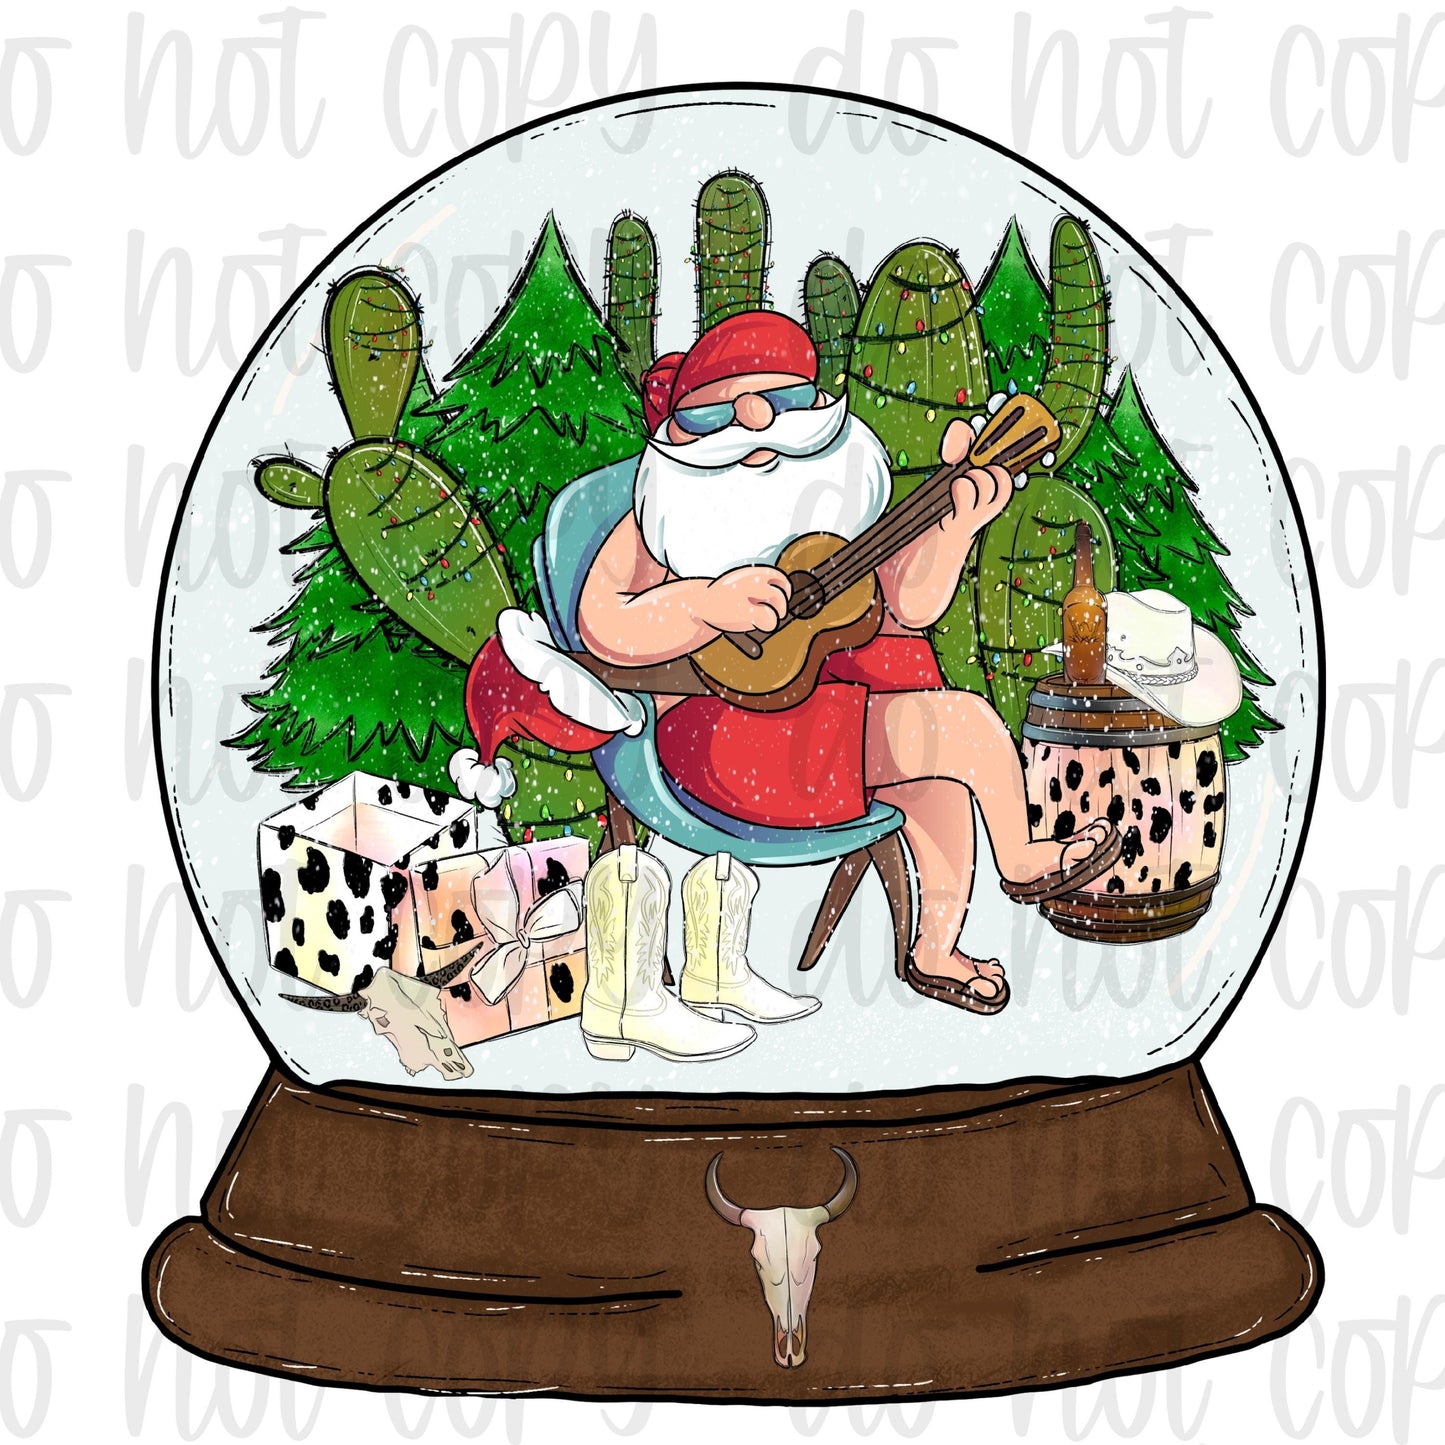 Merry Christmas y’all snow globe